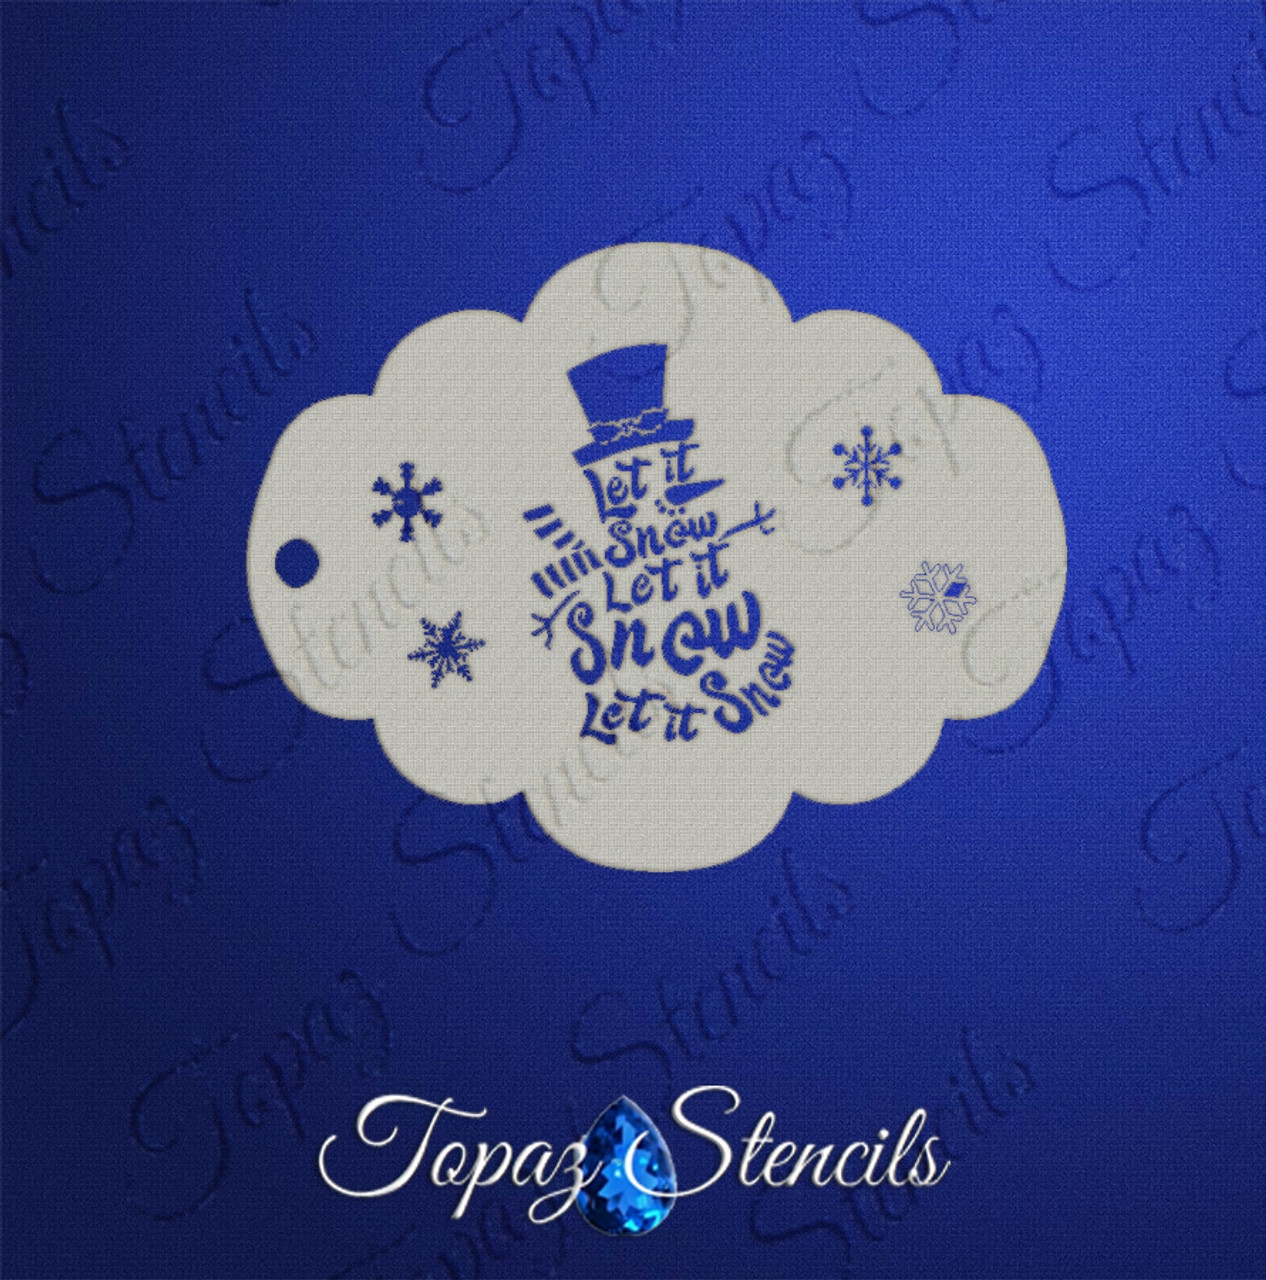 Let It Snowman - Topaz Stencil